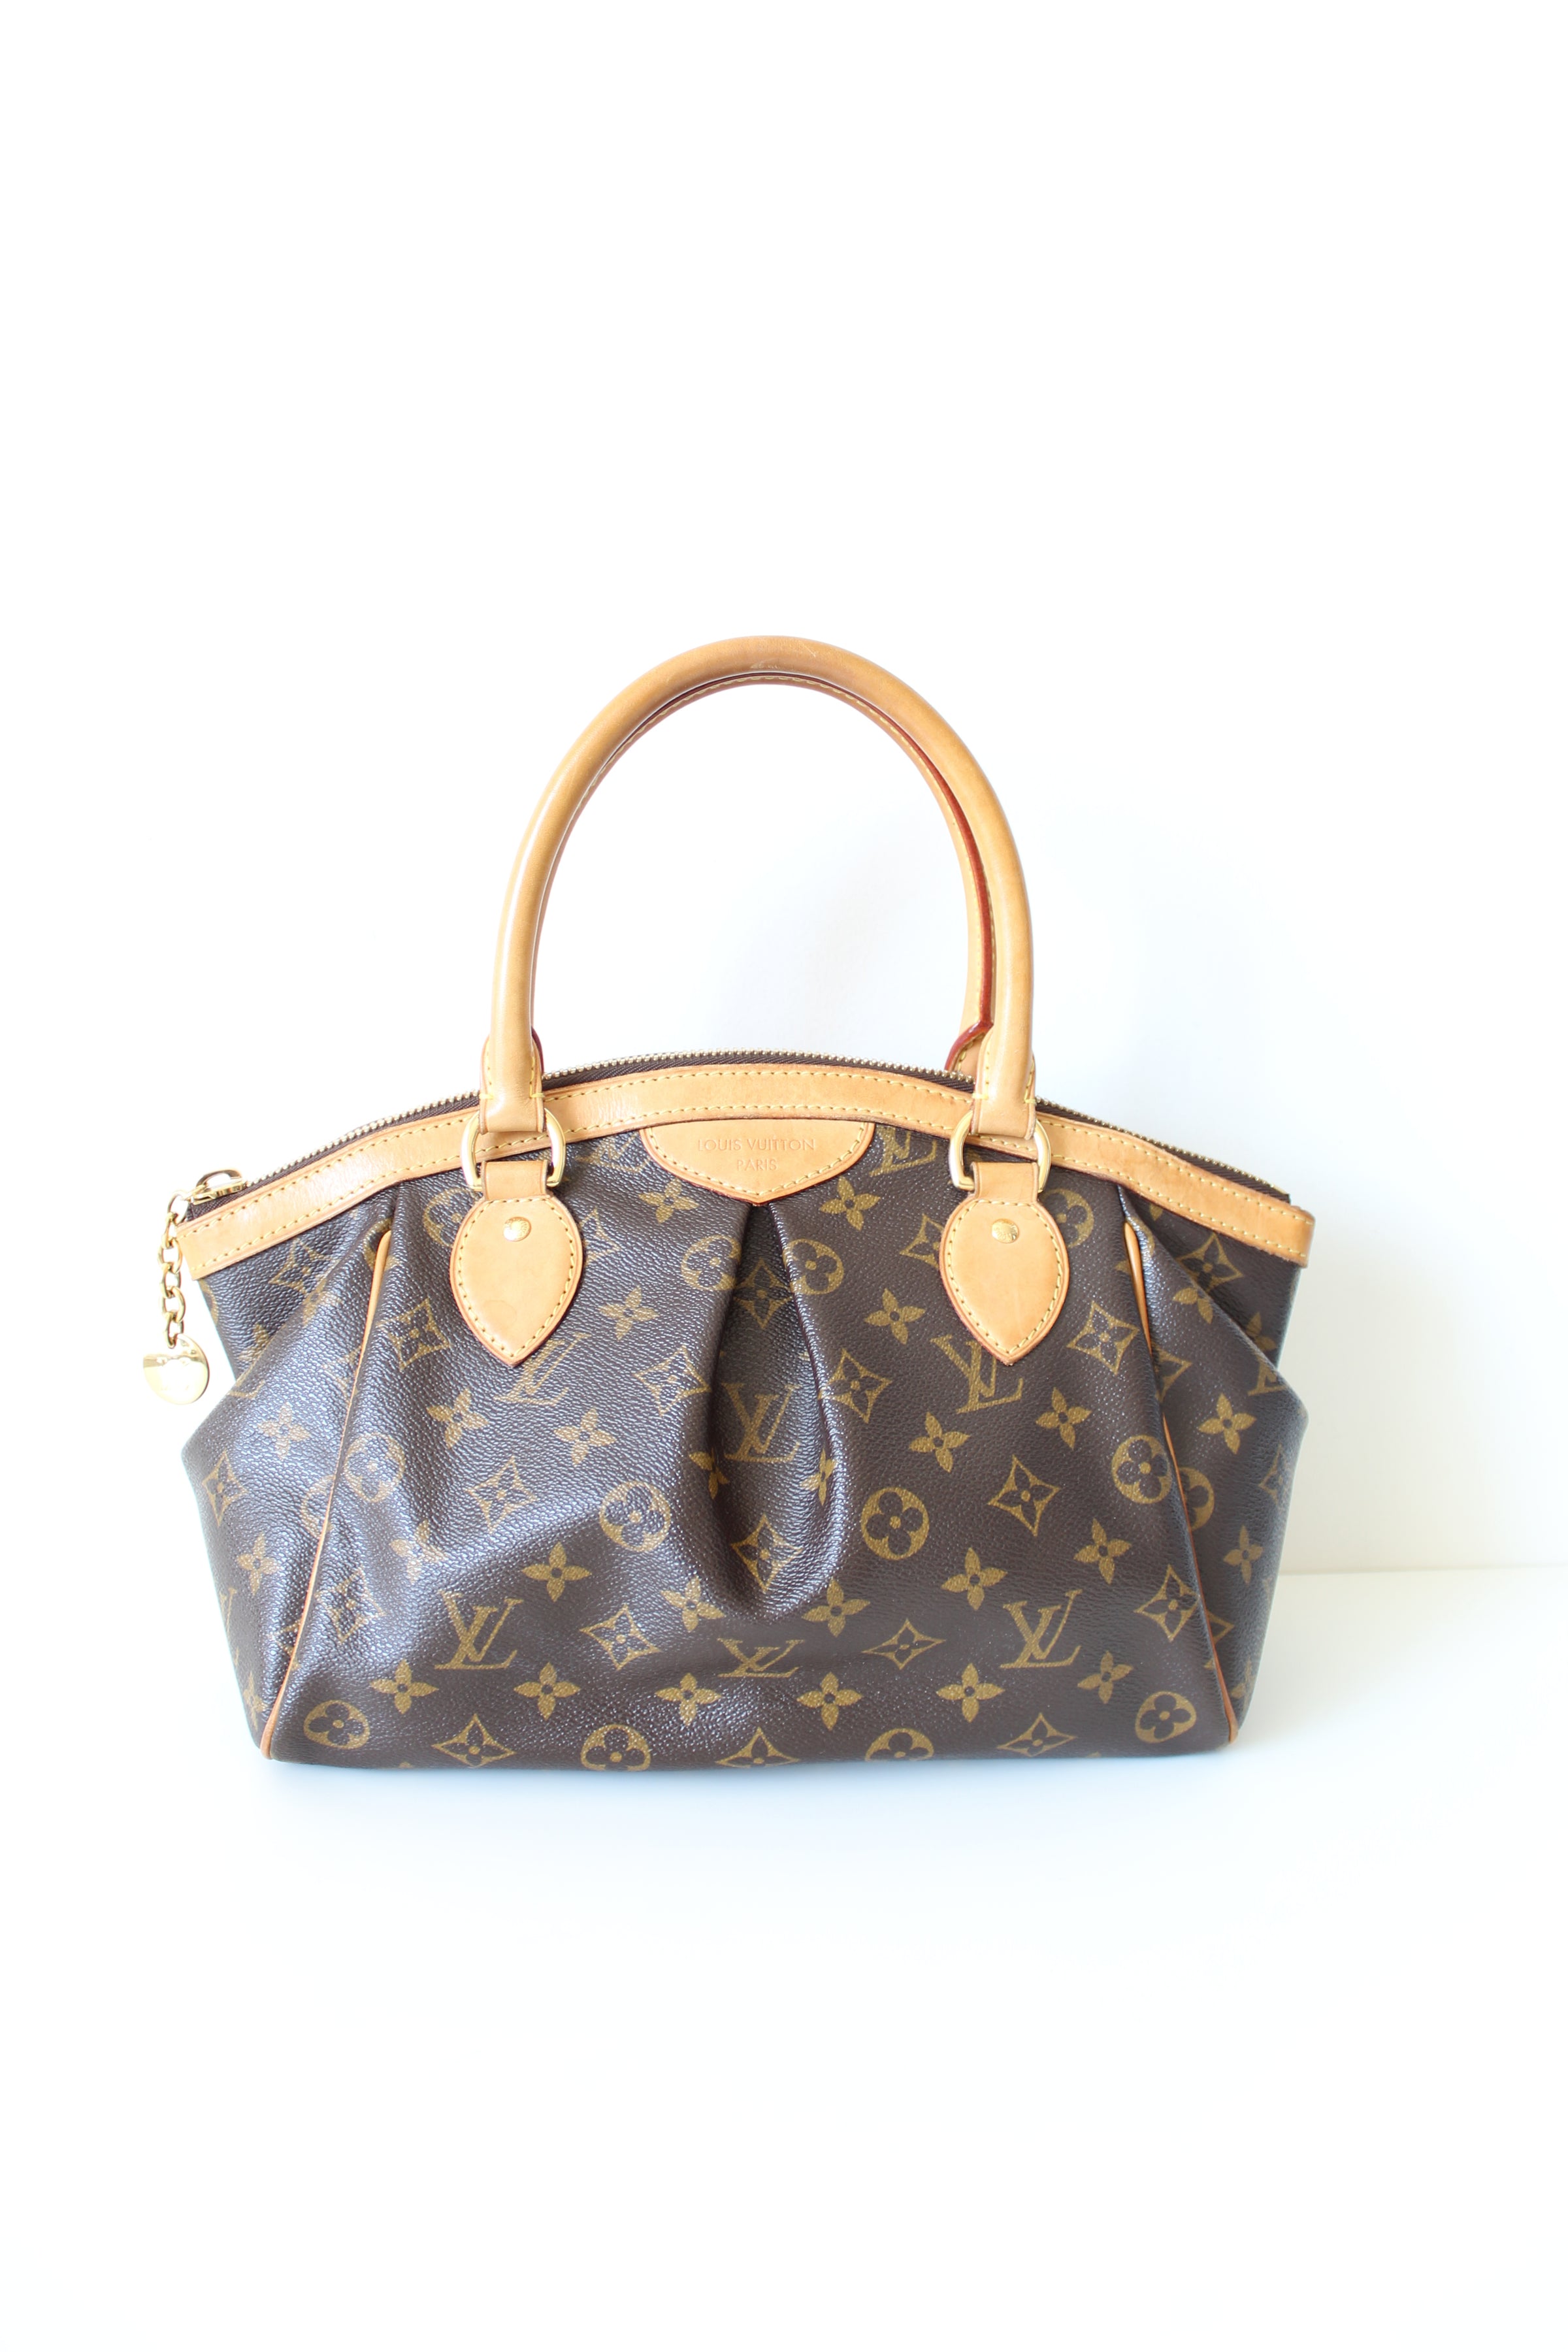 Louis Vuitton Louis Vuitton Tivoli Large Bags & Handbags for Women, Authenticity Guaranteed